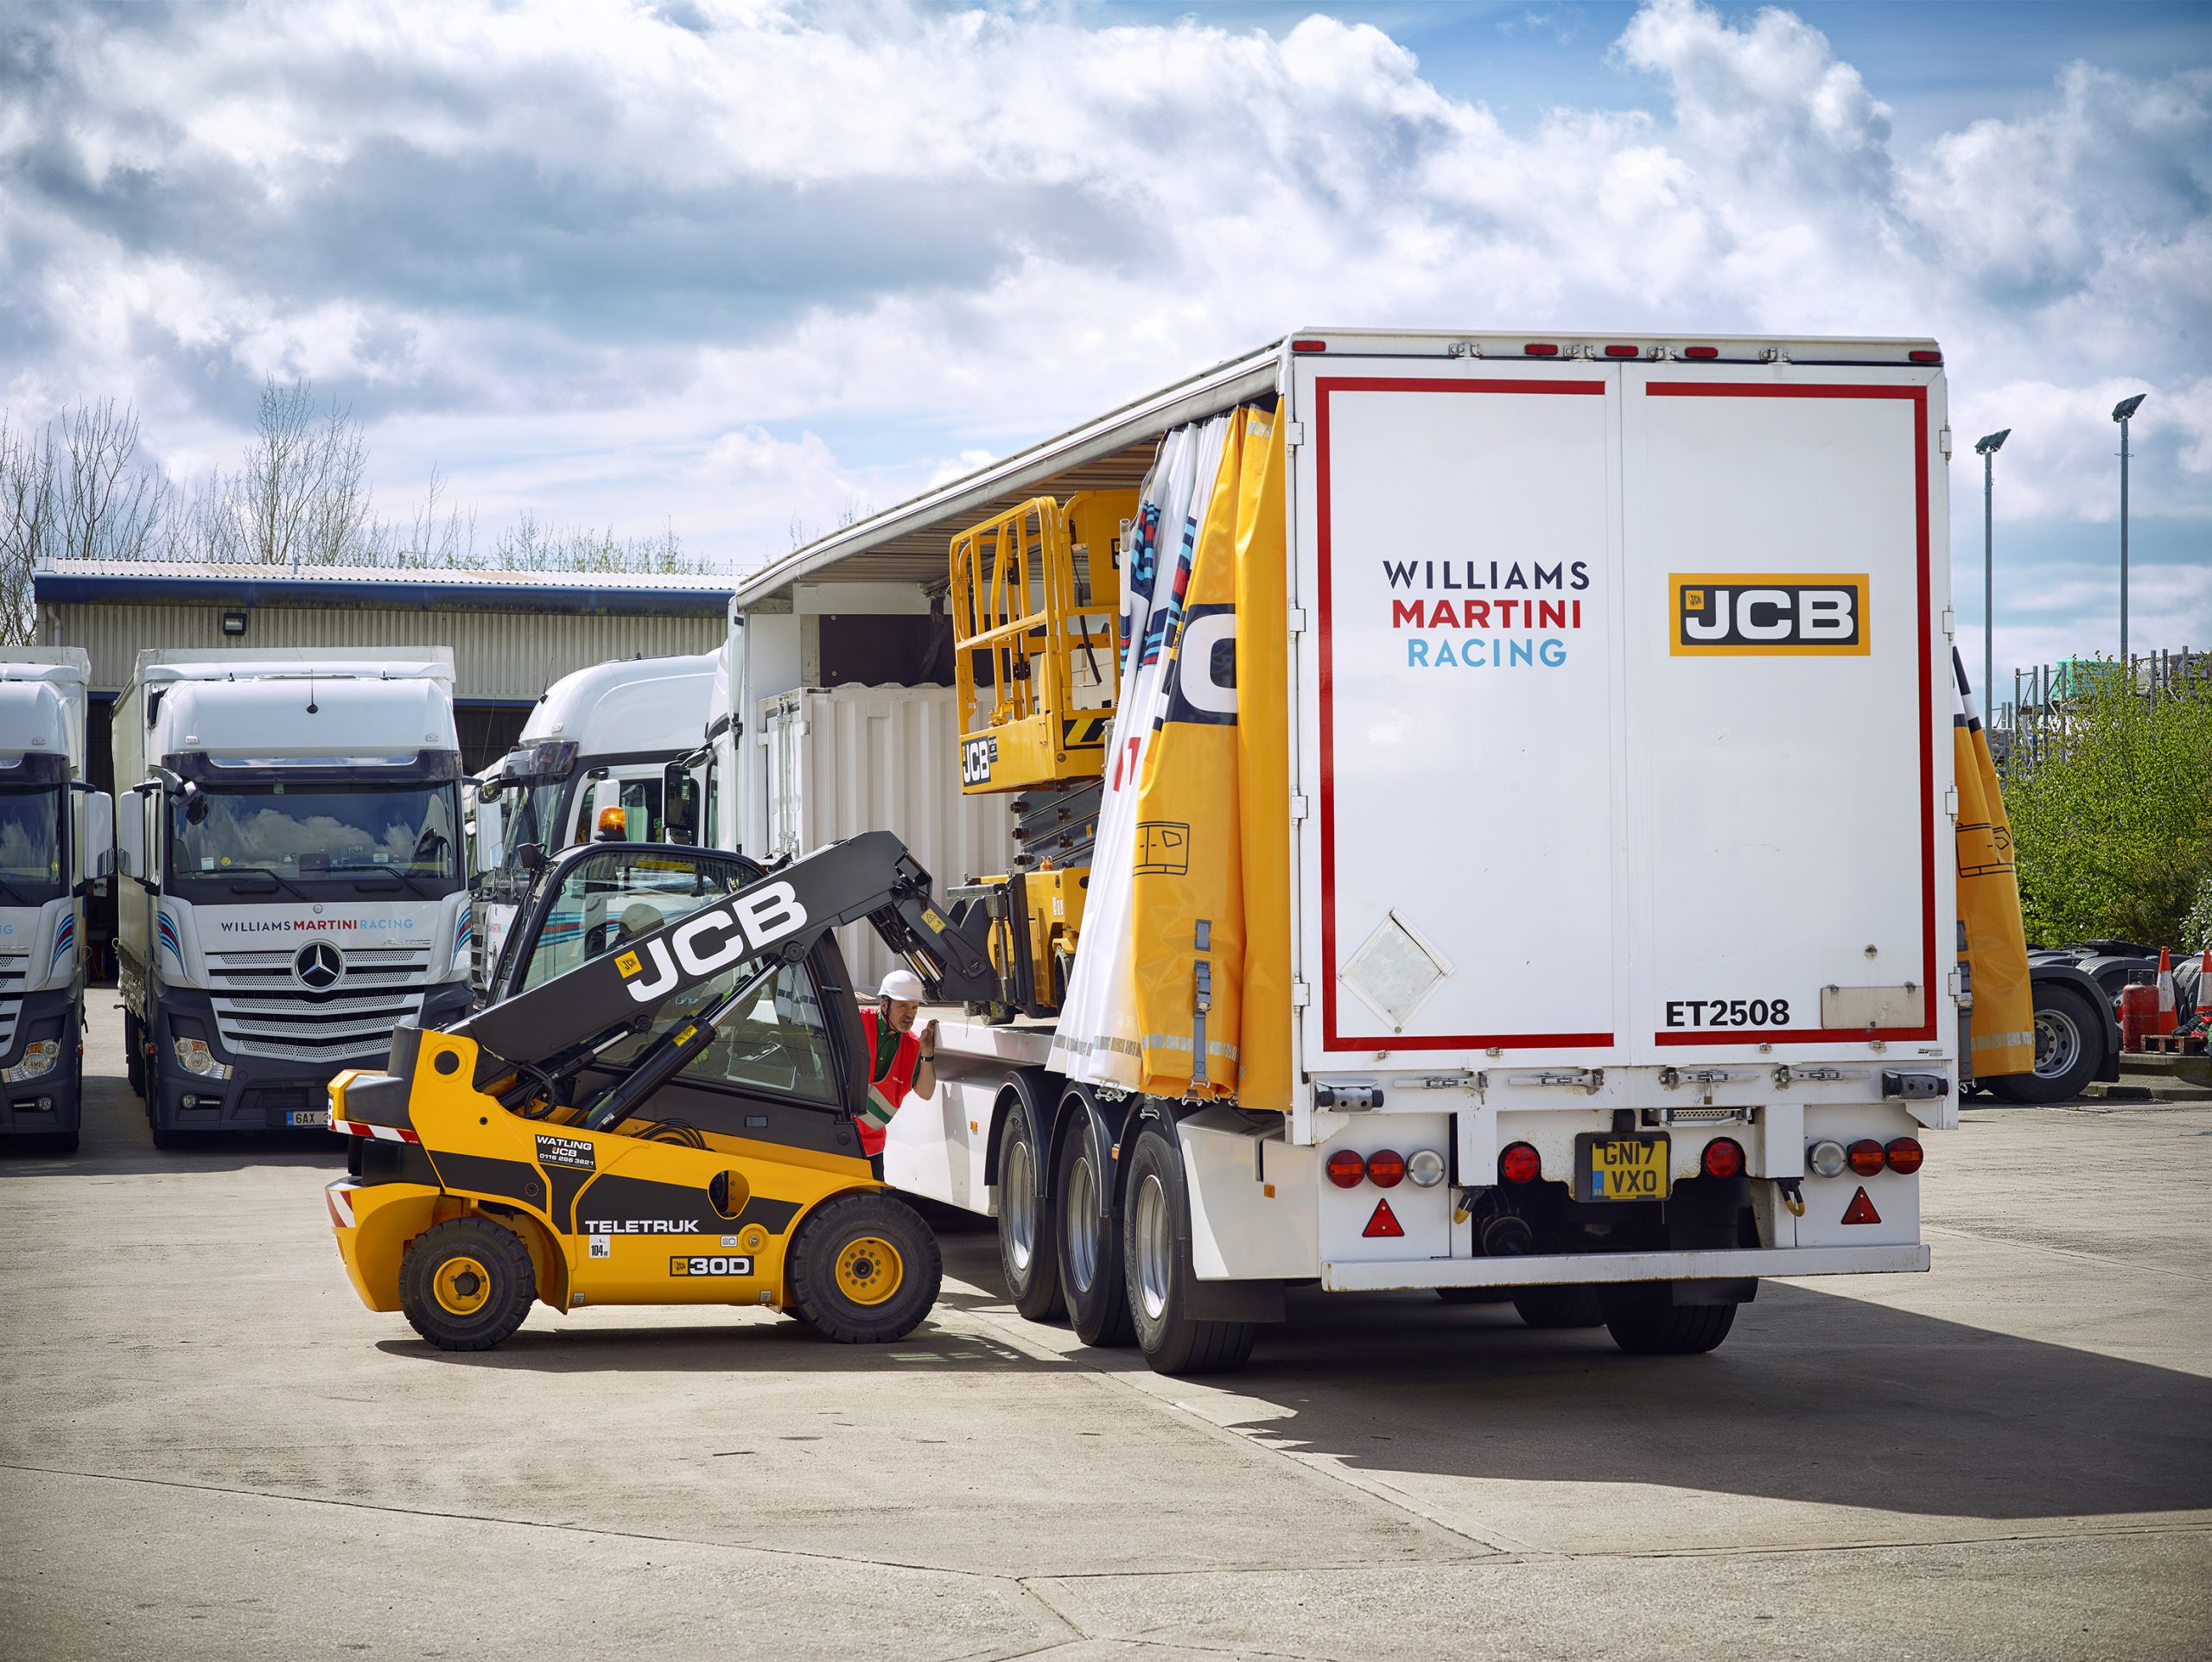 The JCB Williams Martini Racing truck prepares for its European road trip